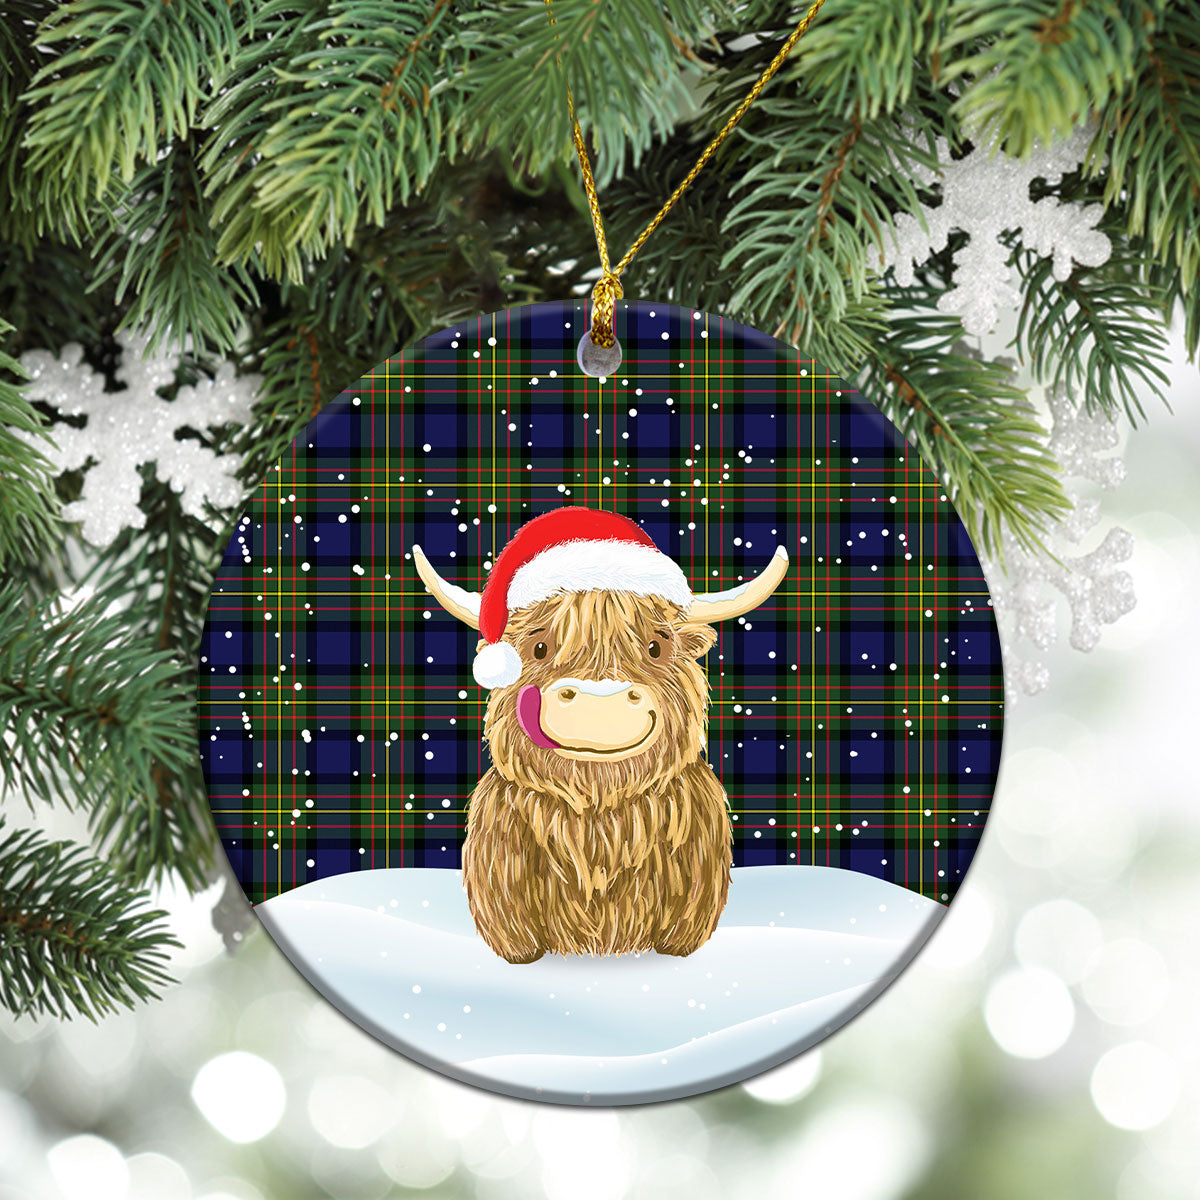 Laws Tartan Christmas Ceramic Ornament - Highland Cows Style